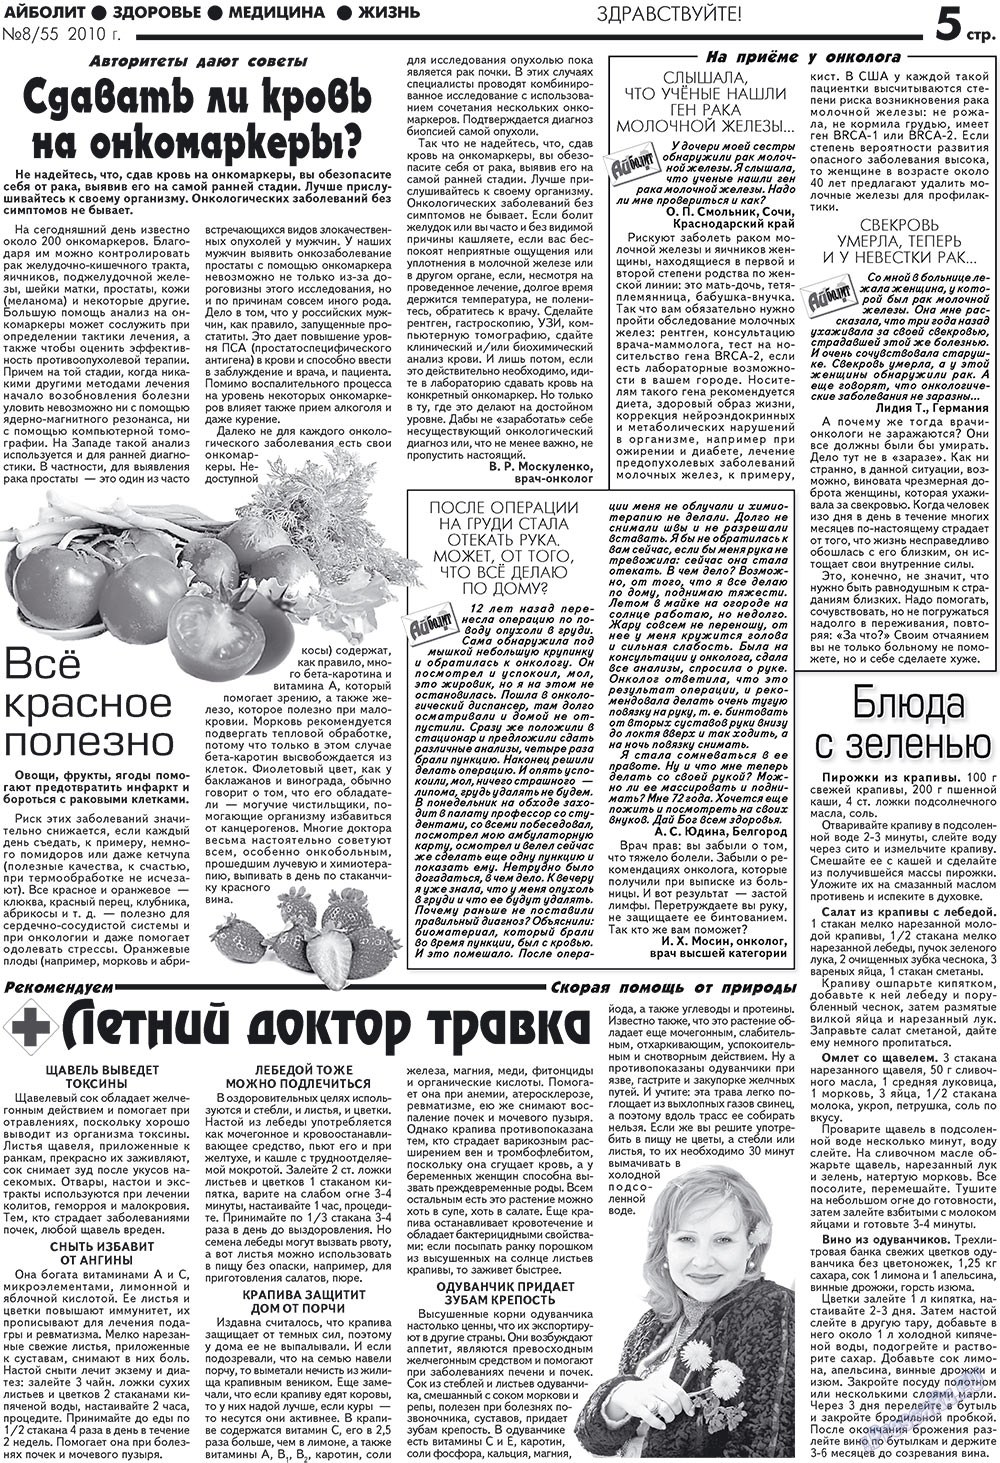 АйБолит (газета). 2010 год, номер 8, стр. 5